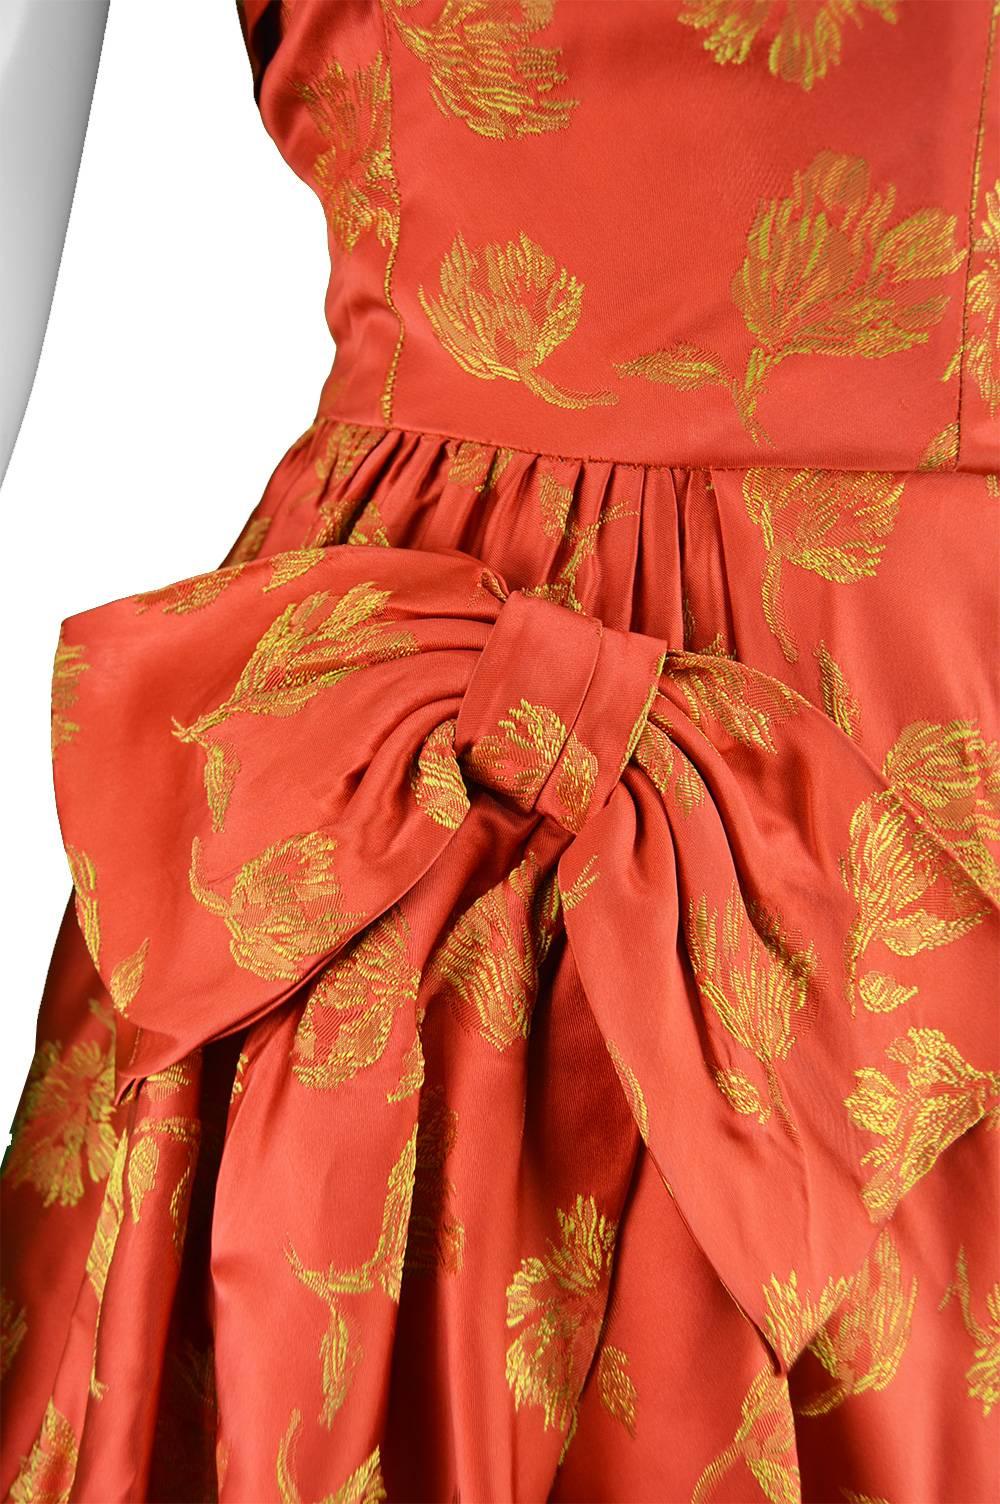 Orange John Selby 1950s Vintage Red & Gold Brocade Jacquard Panelled Dress